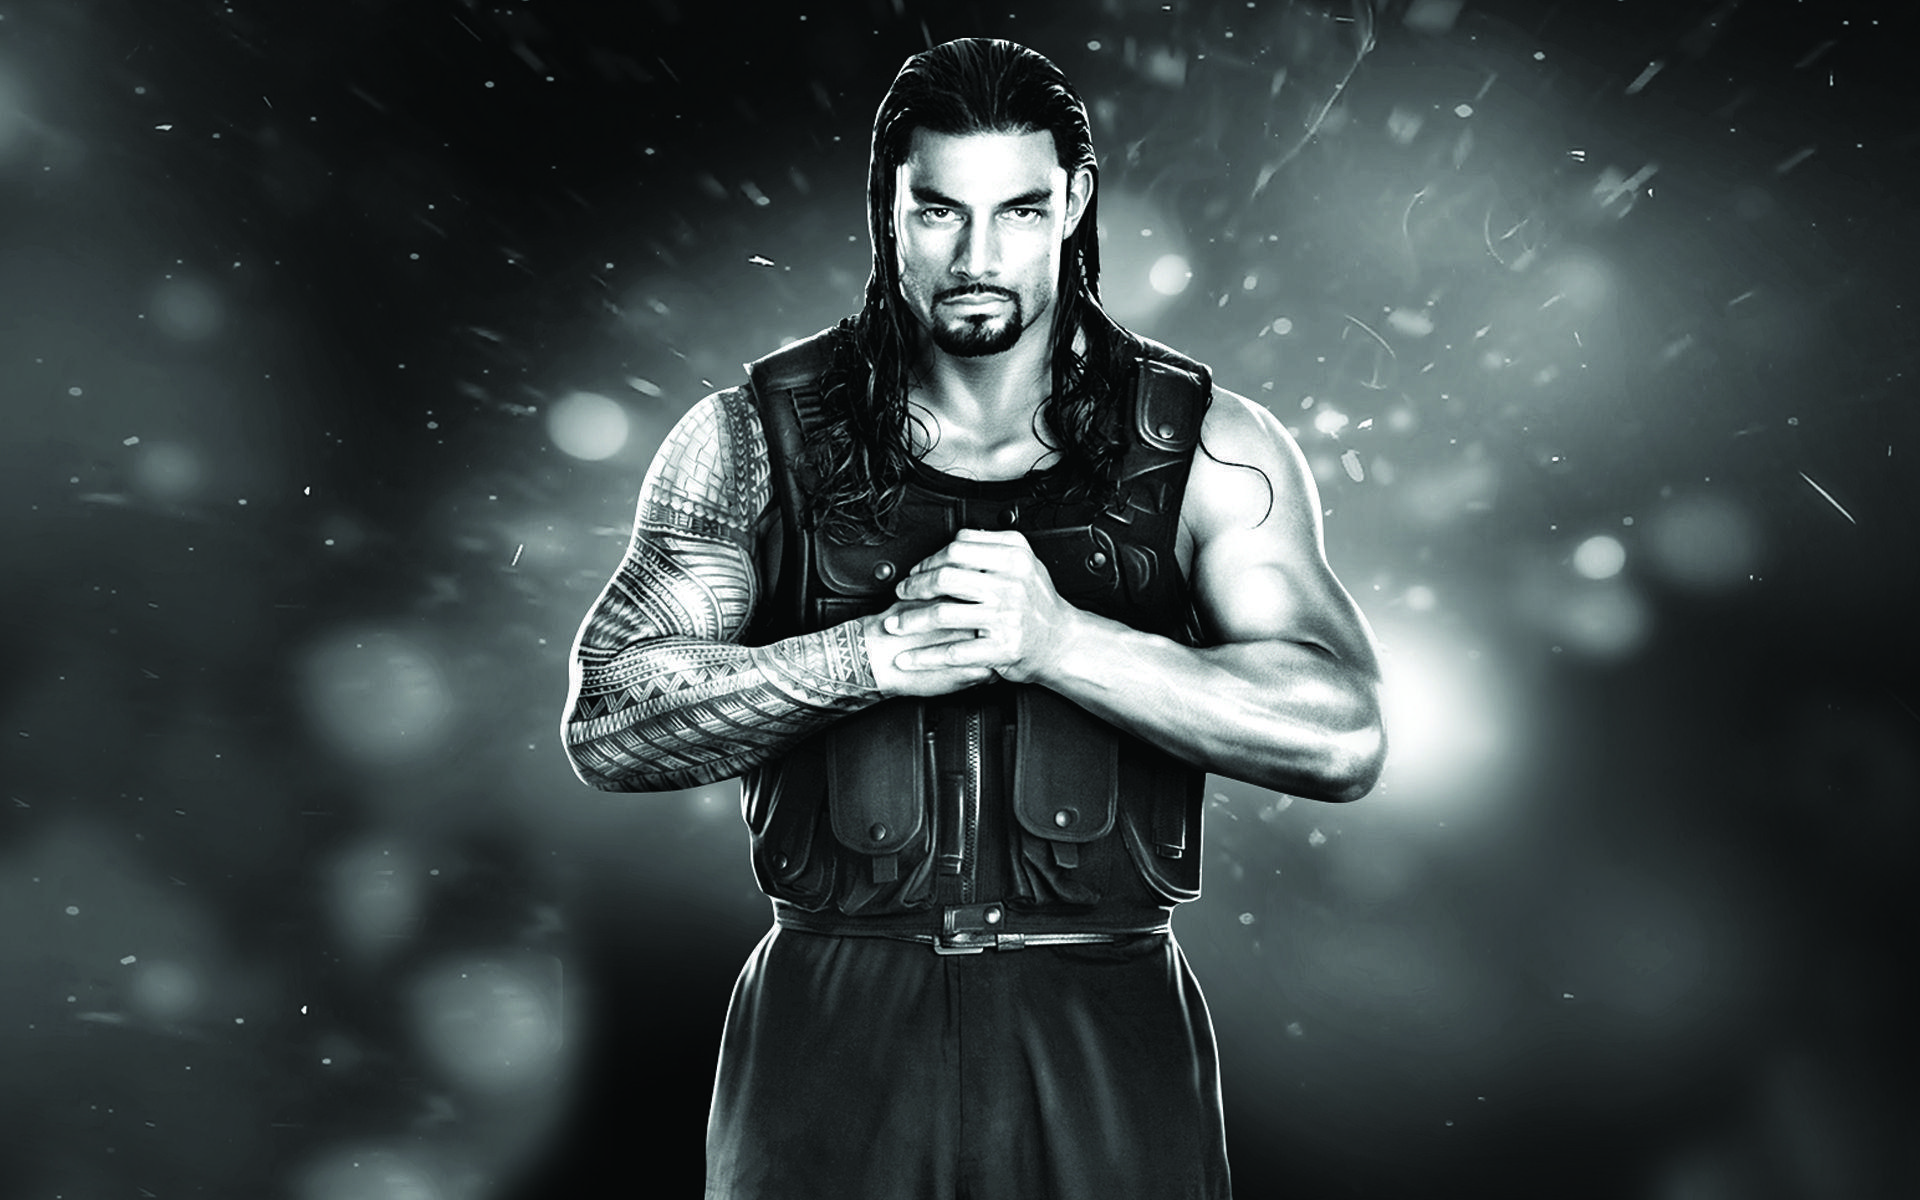 Download WWE Roman Reigns 2016 Wallpapers for Desktop - HD.